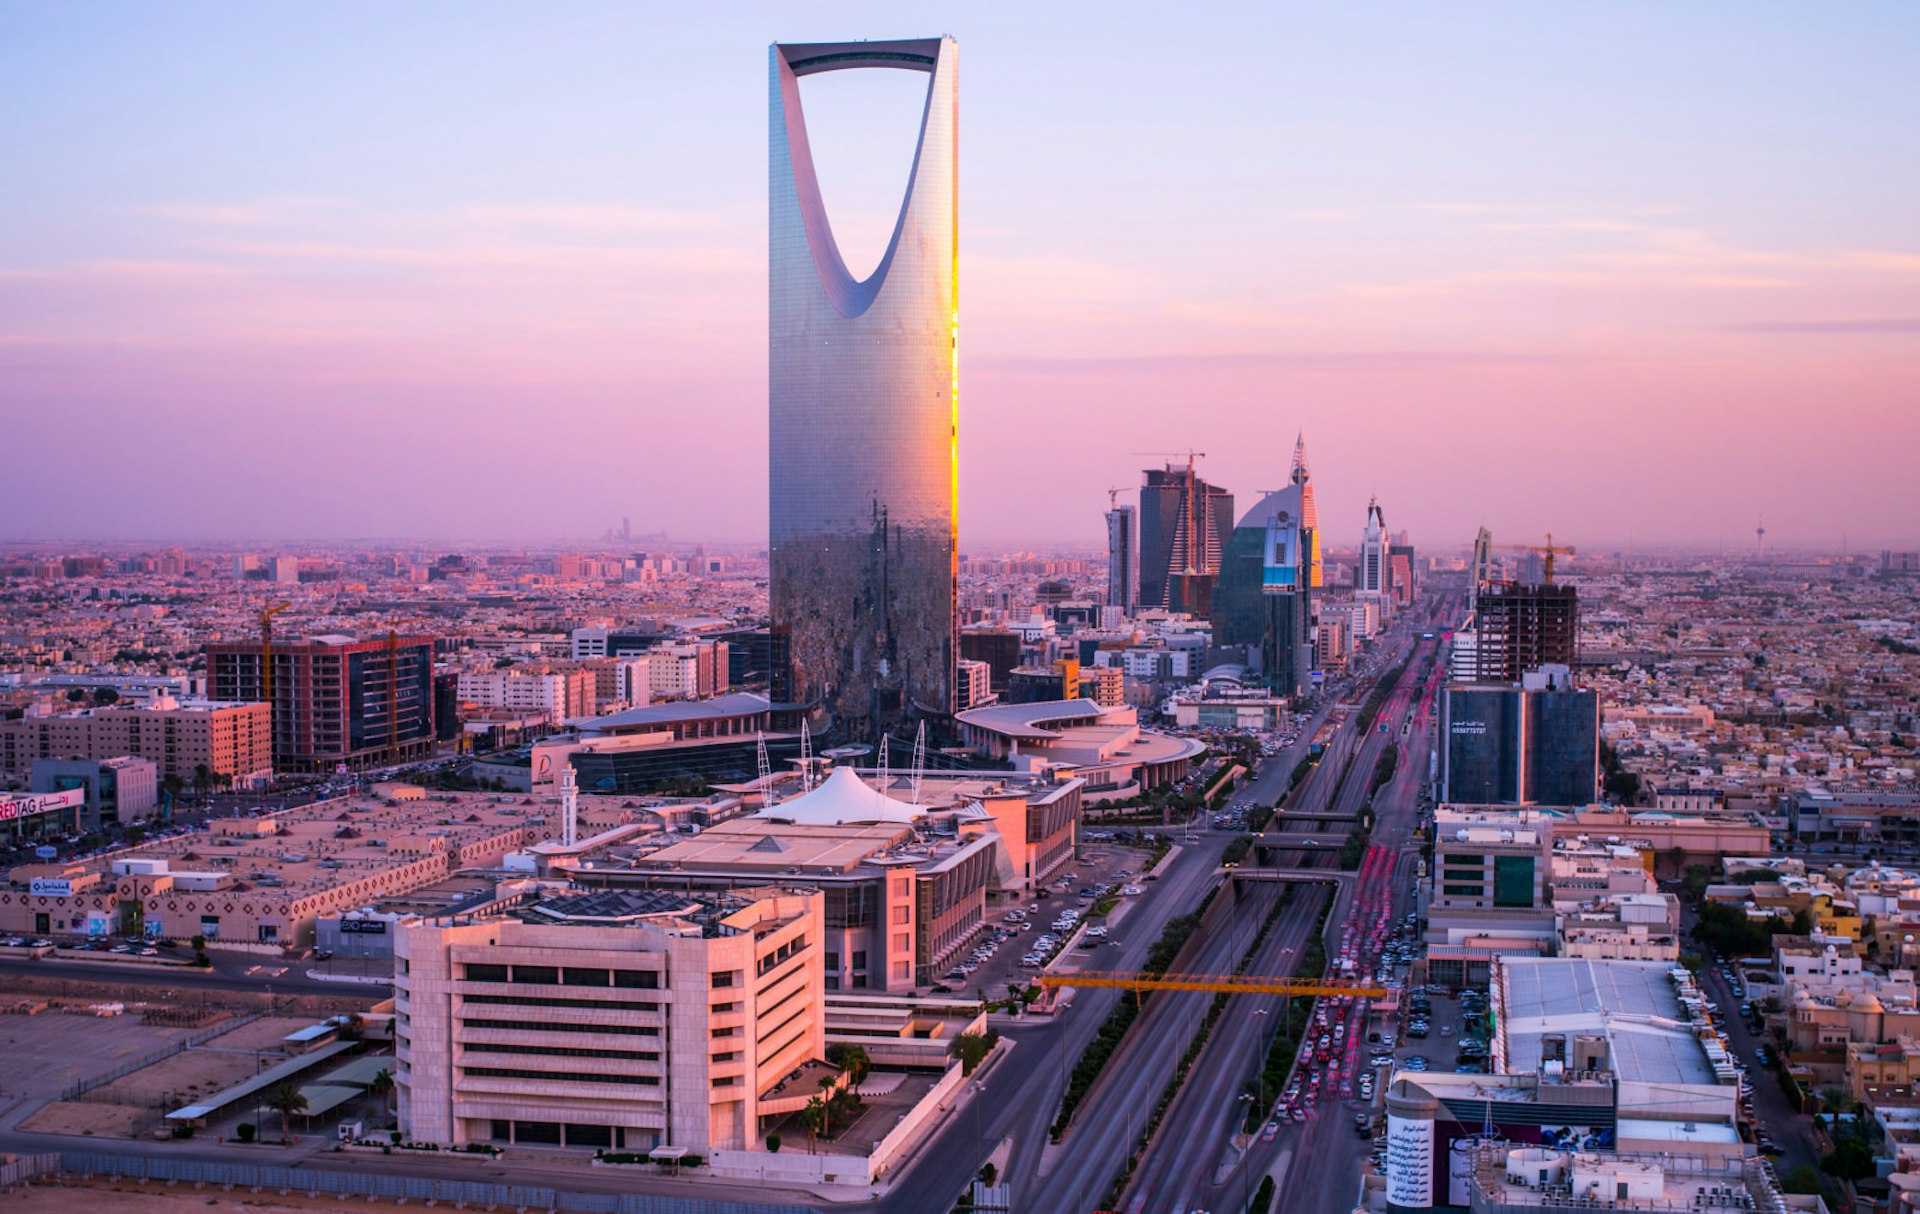 Skyline of Riyadh, capital of Saudi Arabia. Image by Kirklandphotos / Getty Images